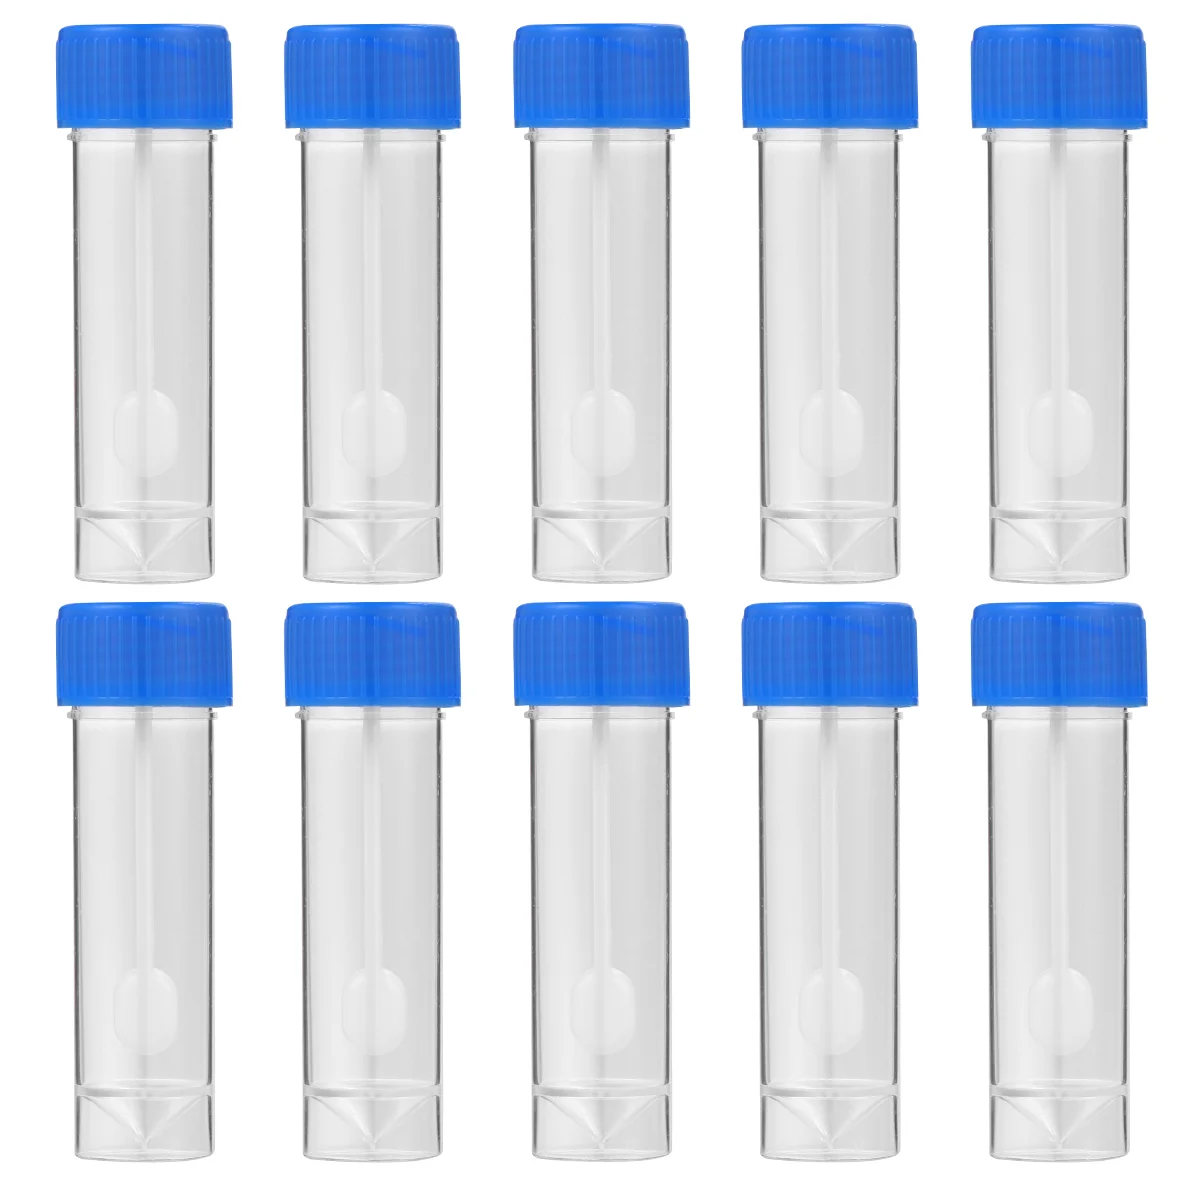 

10 Pcs Sampling Cup Test Tubes Lids Specimen Bottle Stool Sample Urine Plastic Container